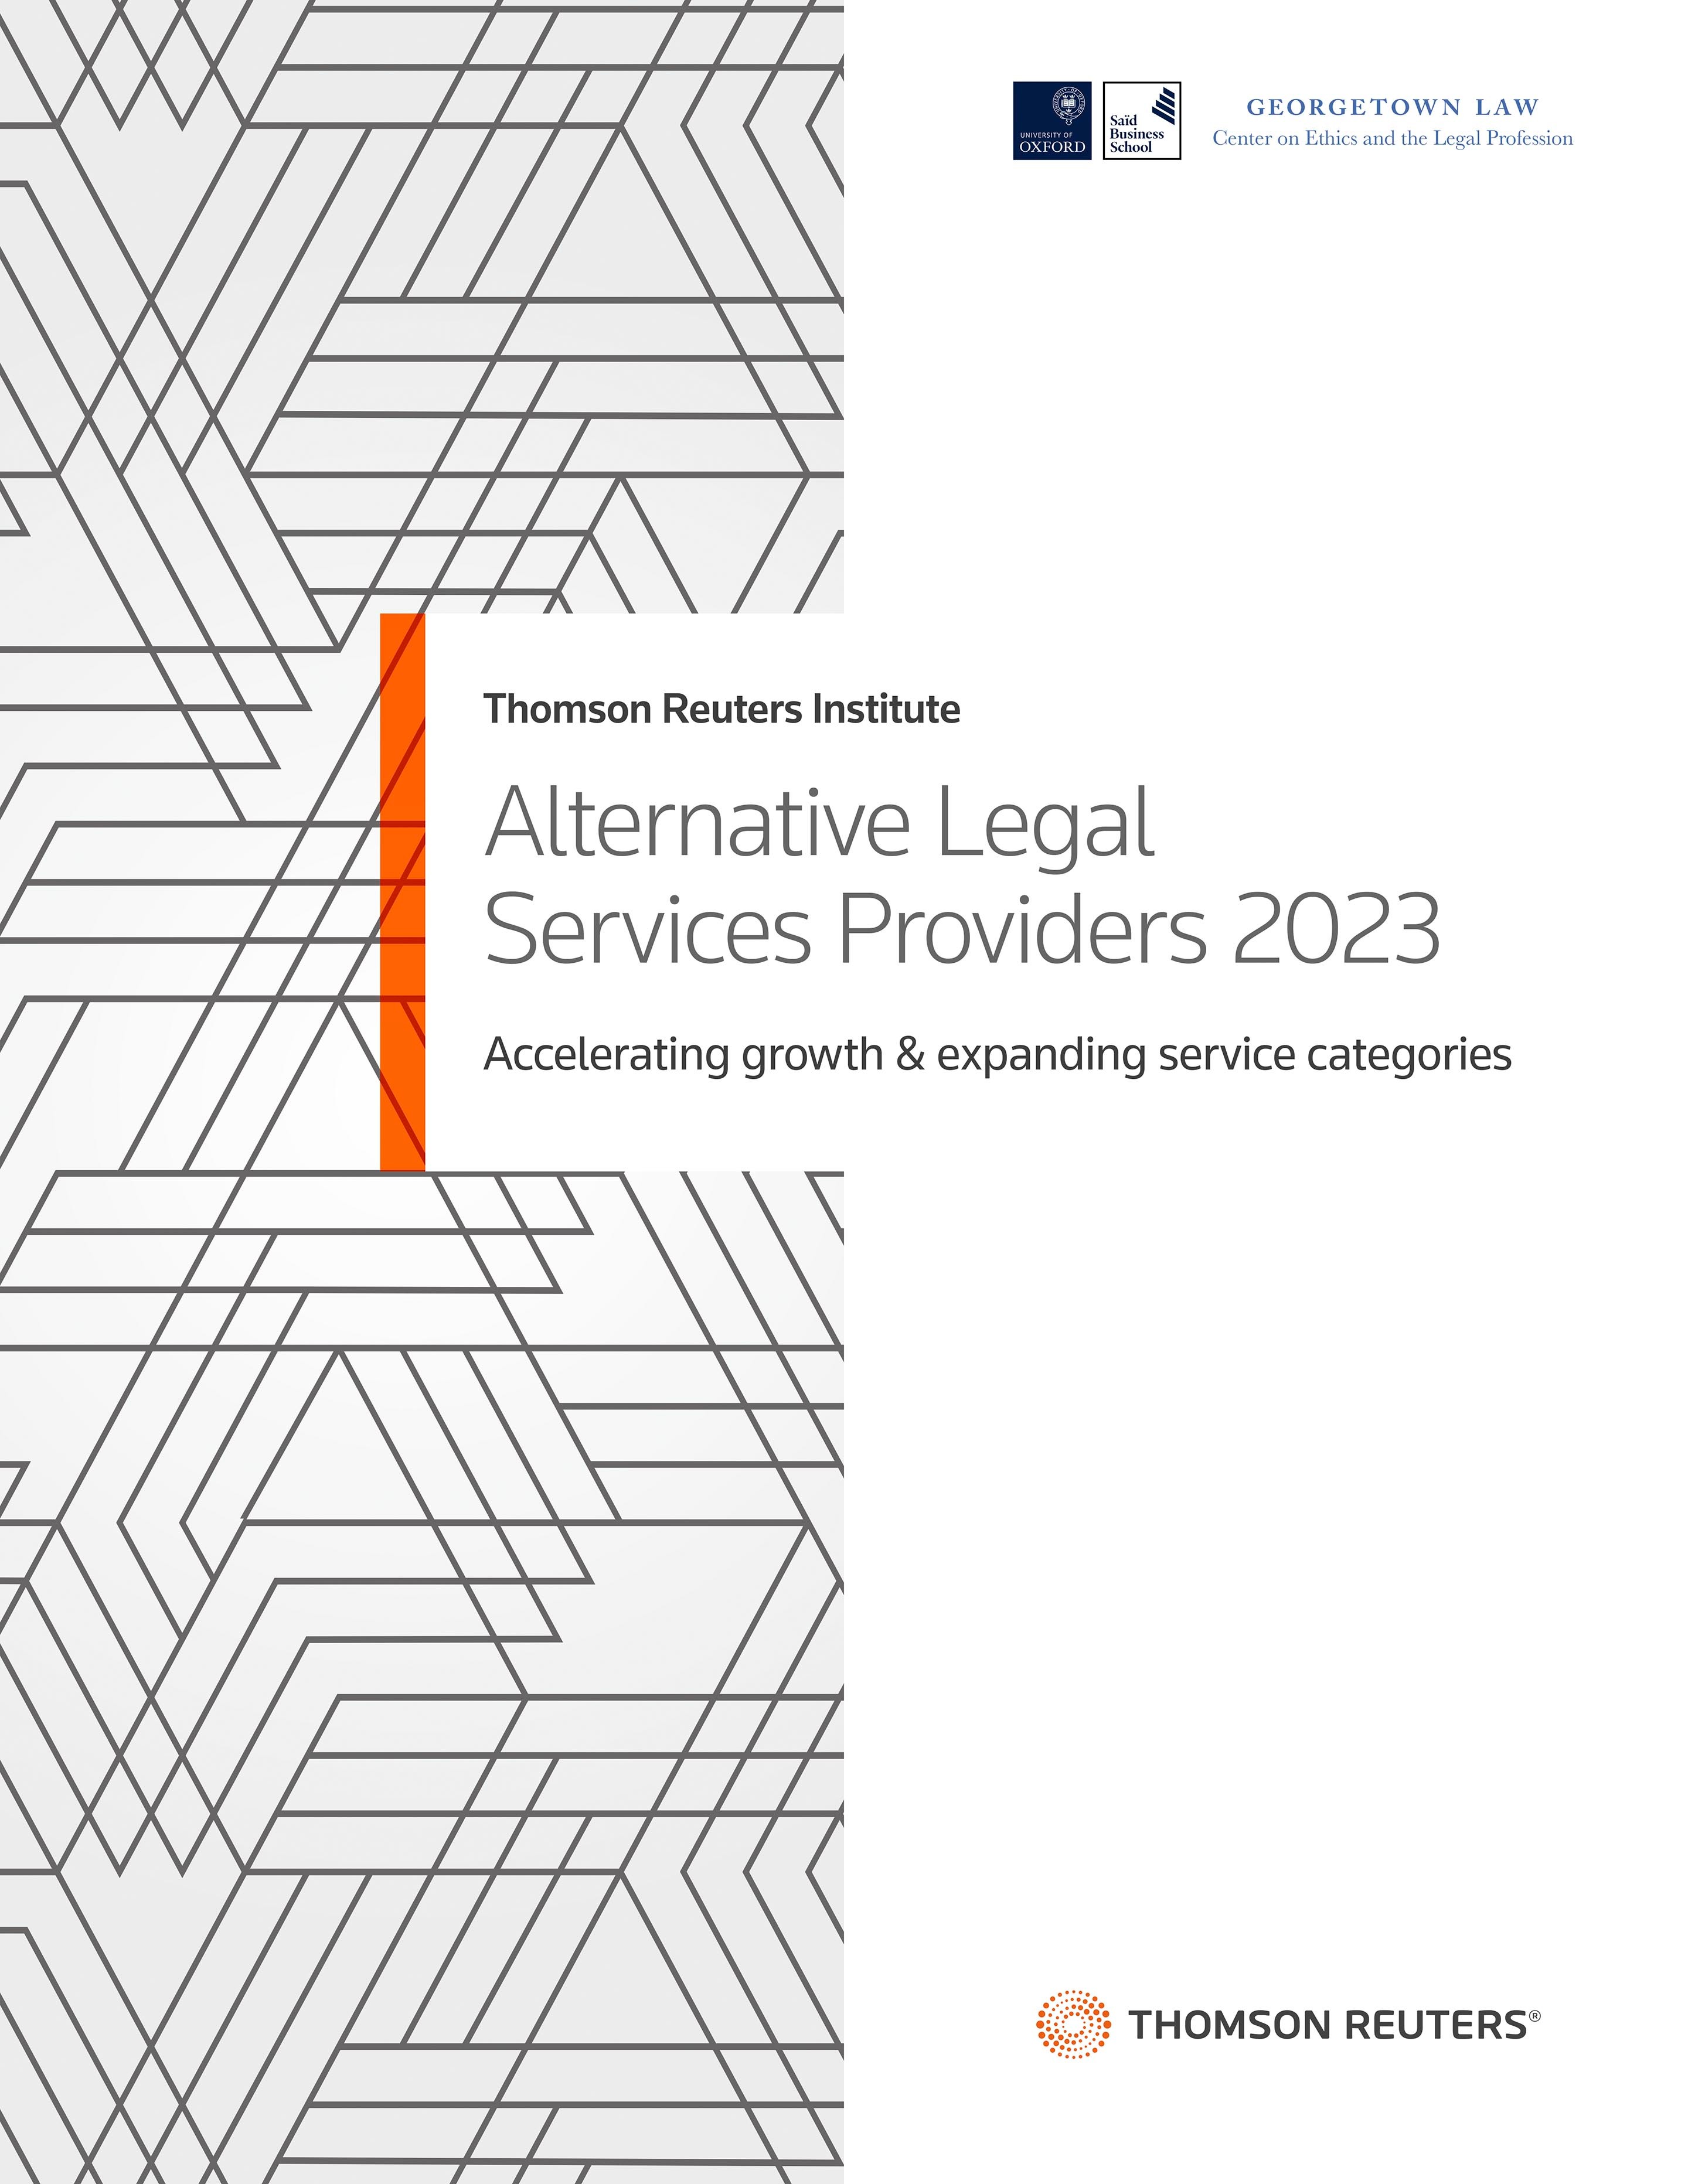 Alternative Legal Services Providers 2023